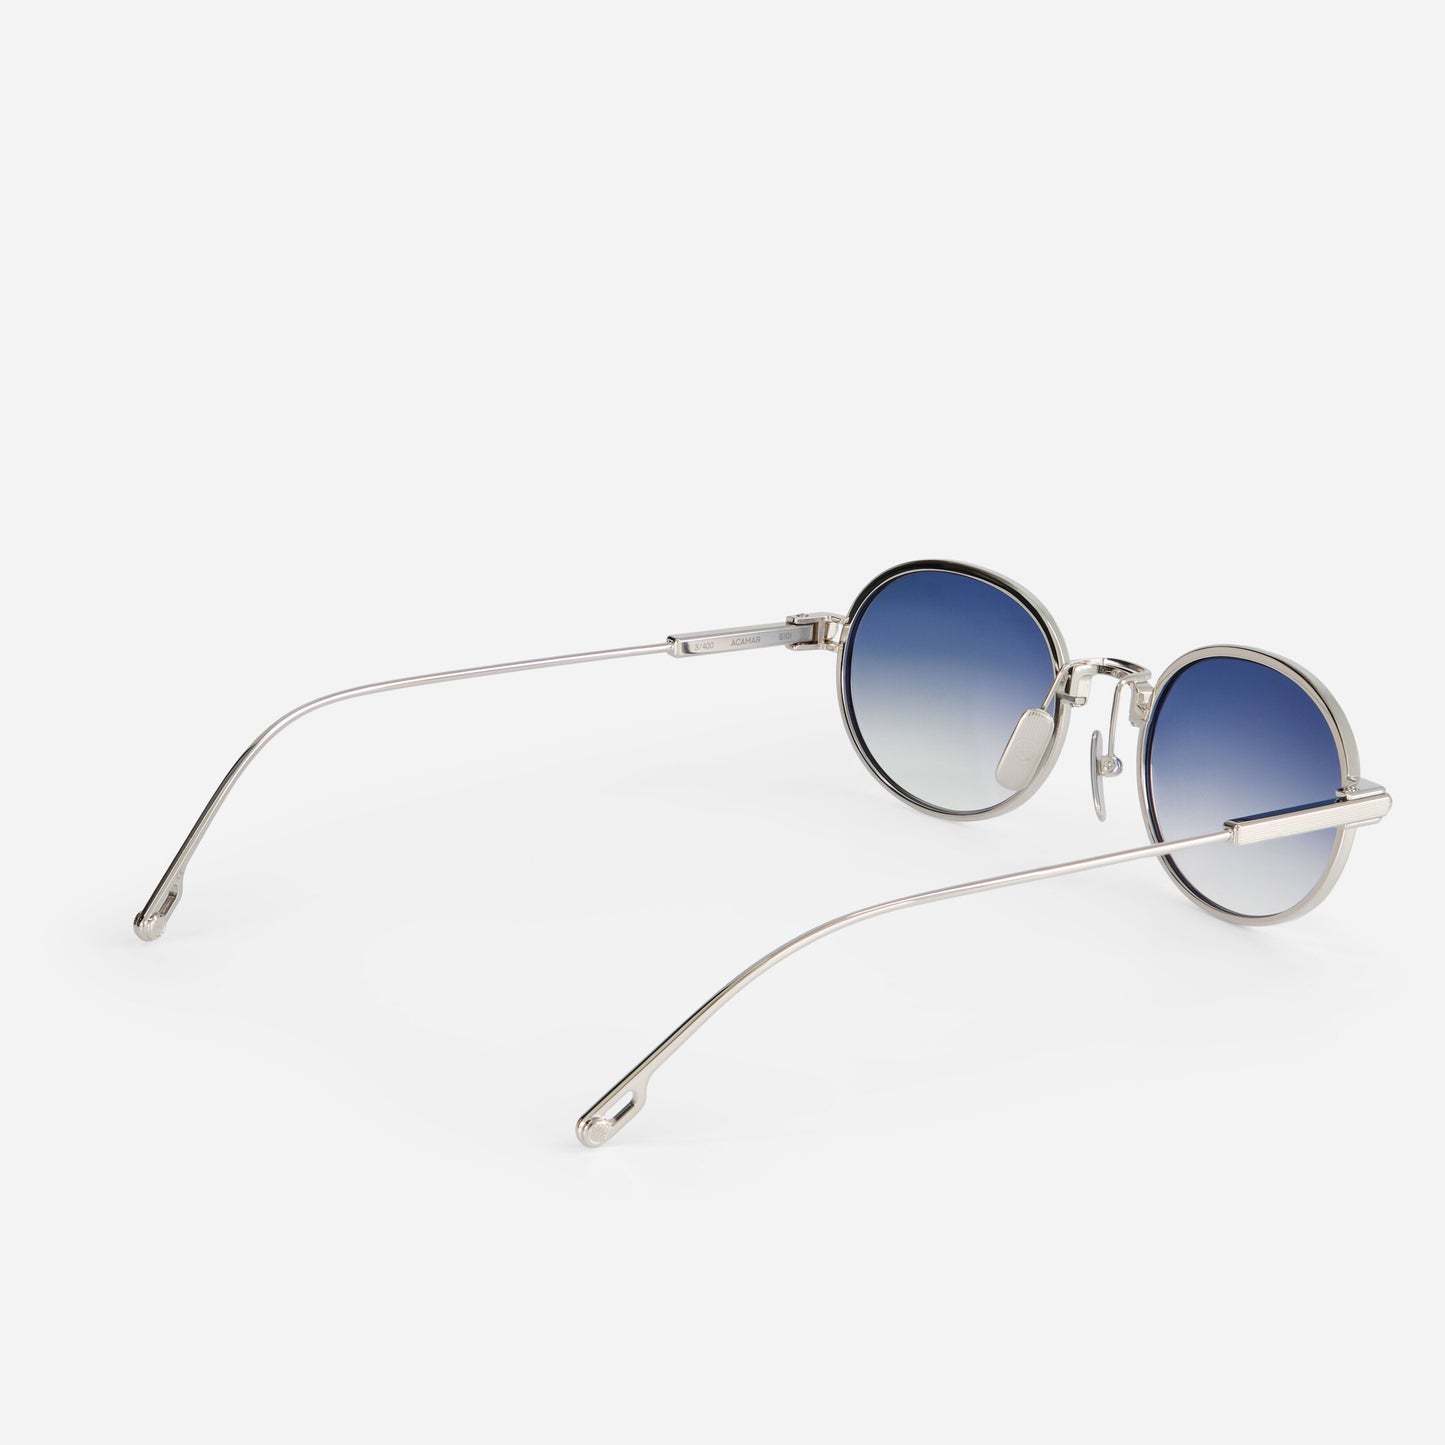 Sato - Acamar S101 sunglasses - Platinium and blue stone sunglasses